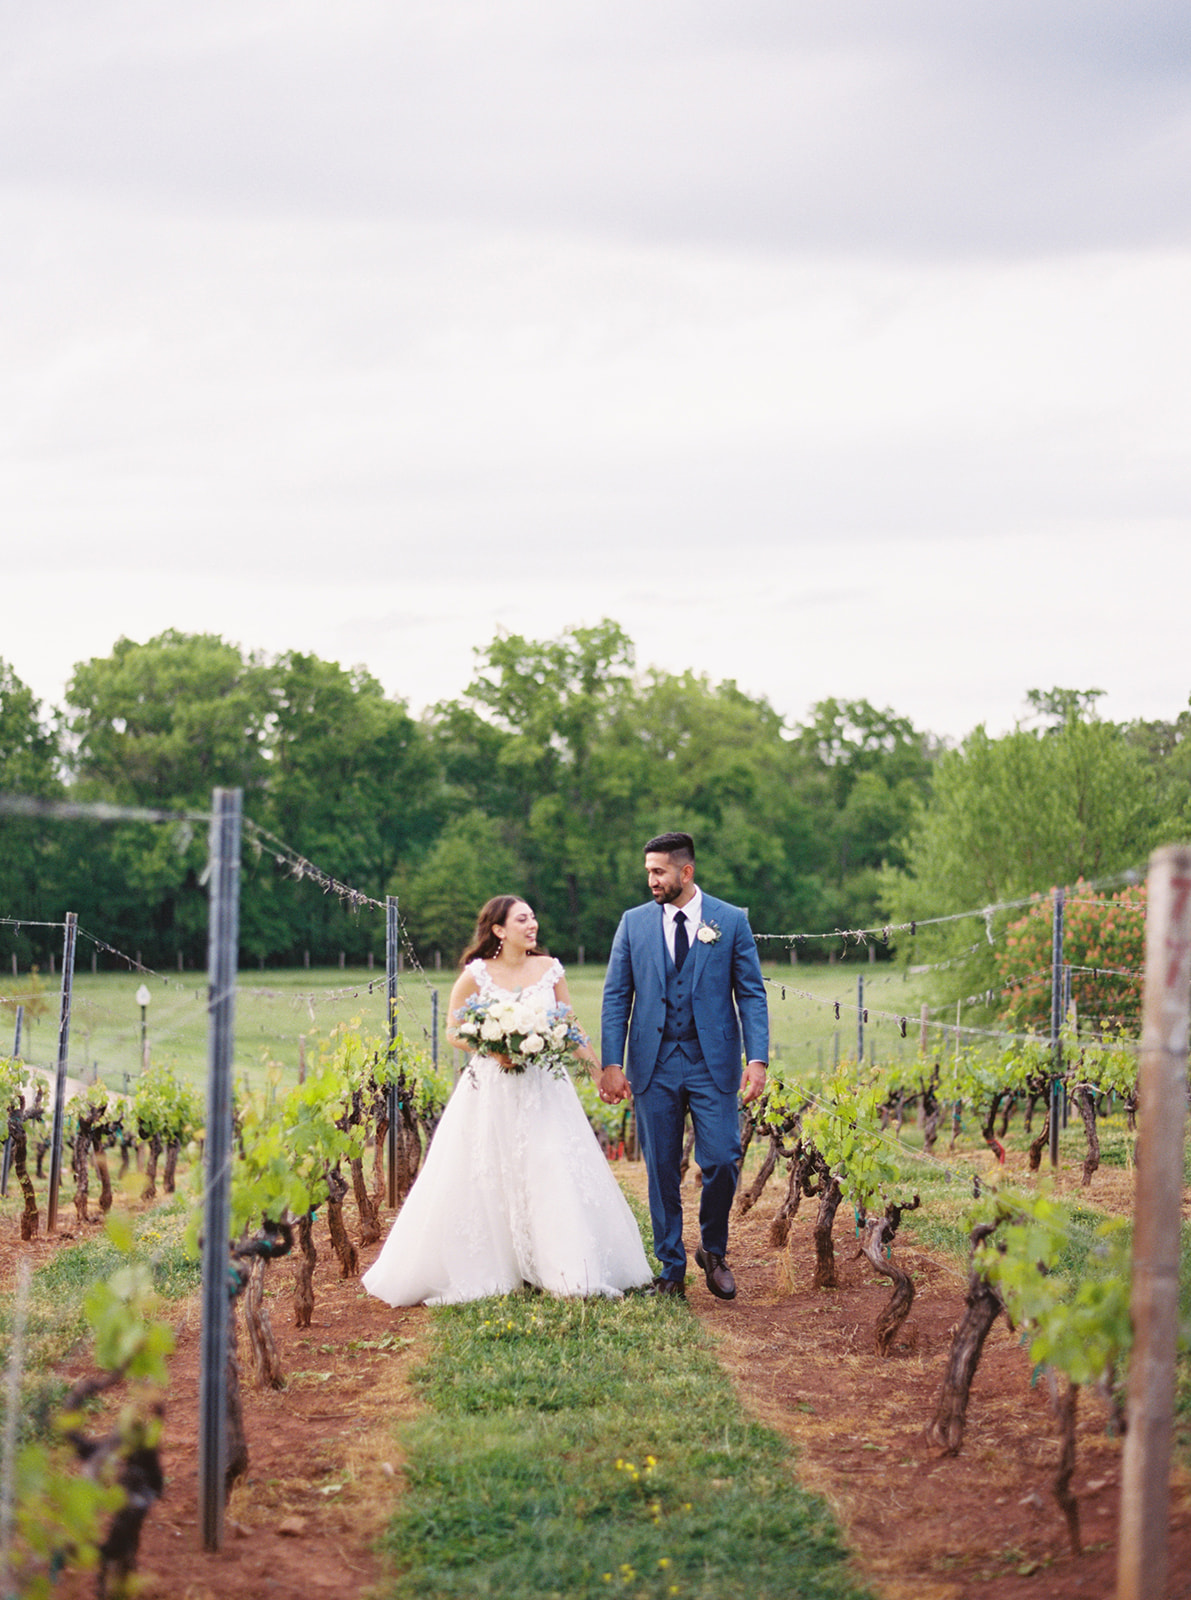 morais vineyard winery virginia bealeton wedding vineyard wedding photos just married initimate walking together couples